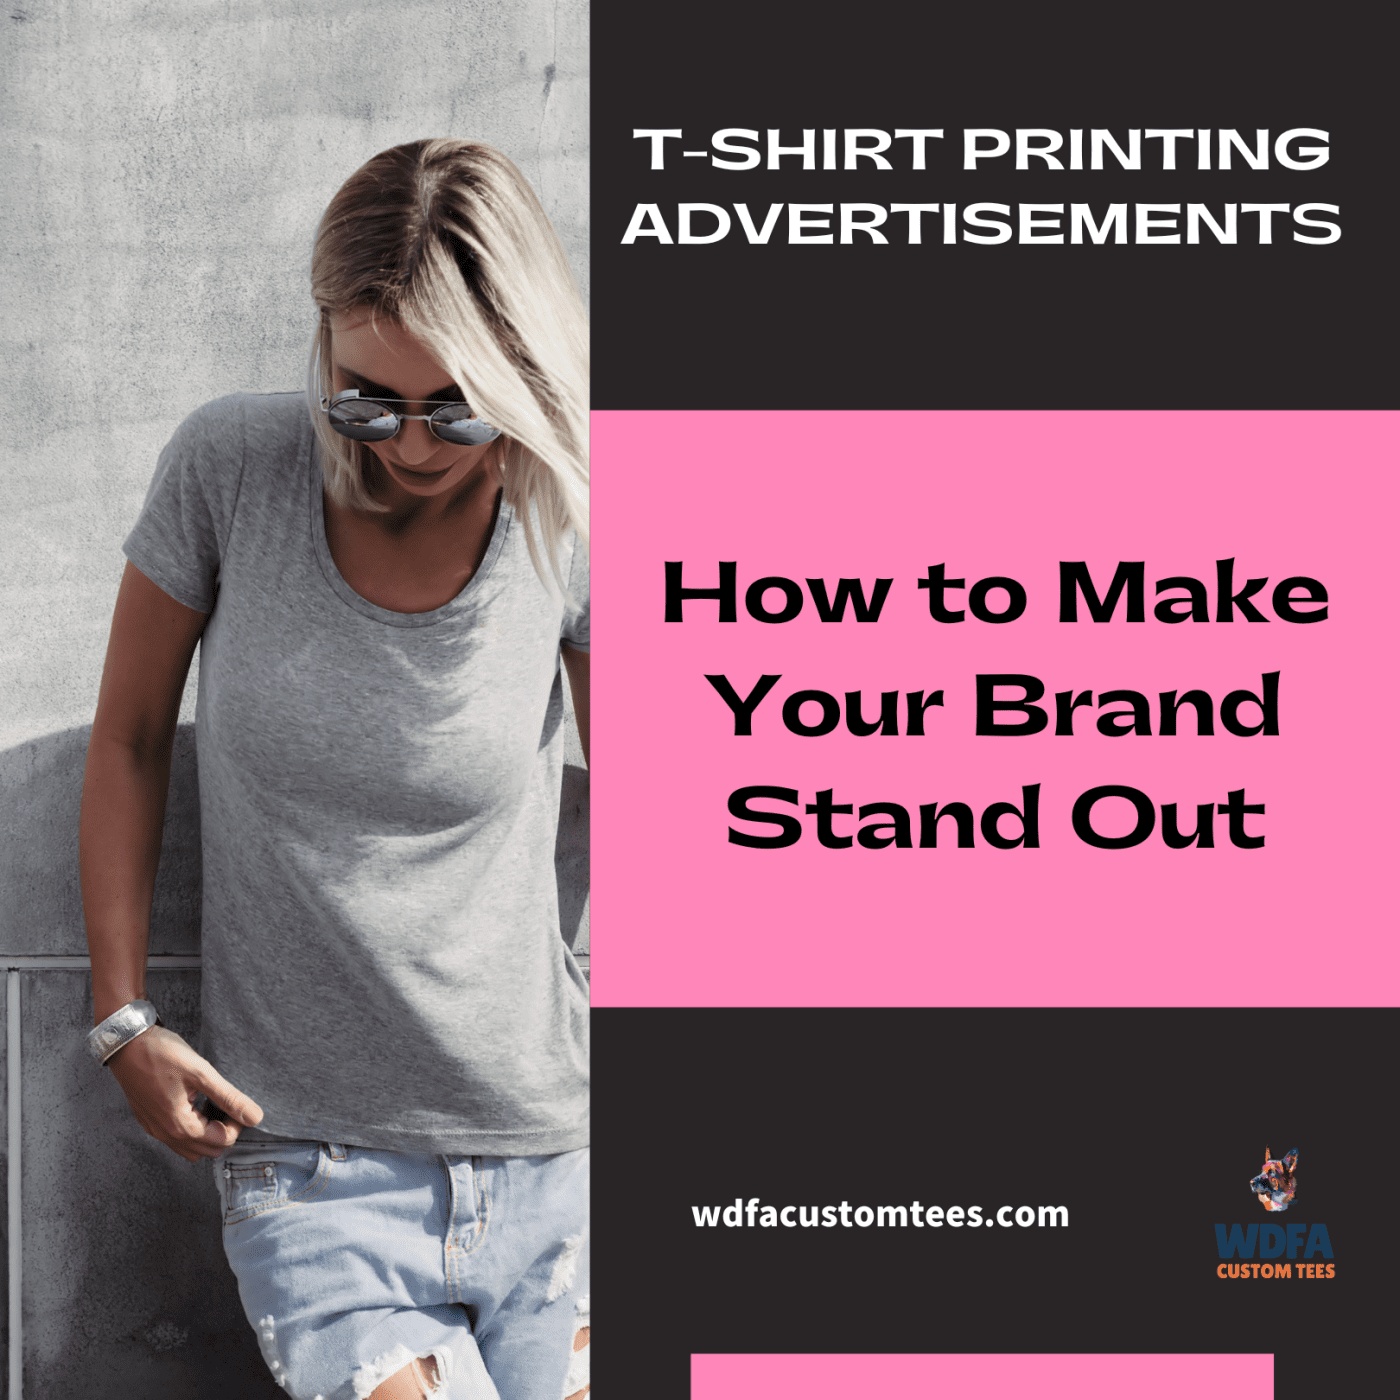 T-Shirt Printing Advertisements - How to Make Your Brand Stand Out, t shirt printing advertisements, custom t-shirts, t-shirt printing, custom t shirts, t shirt printing